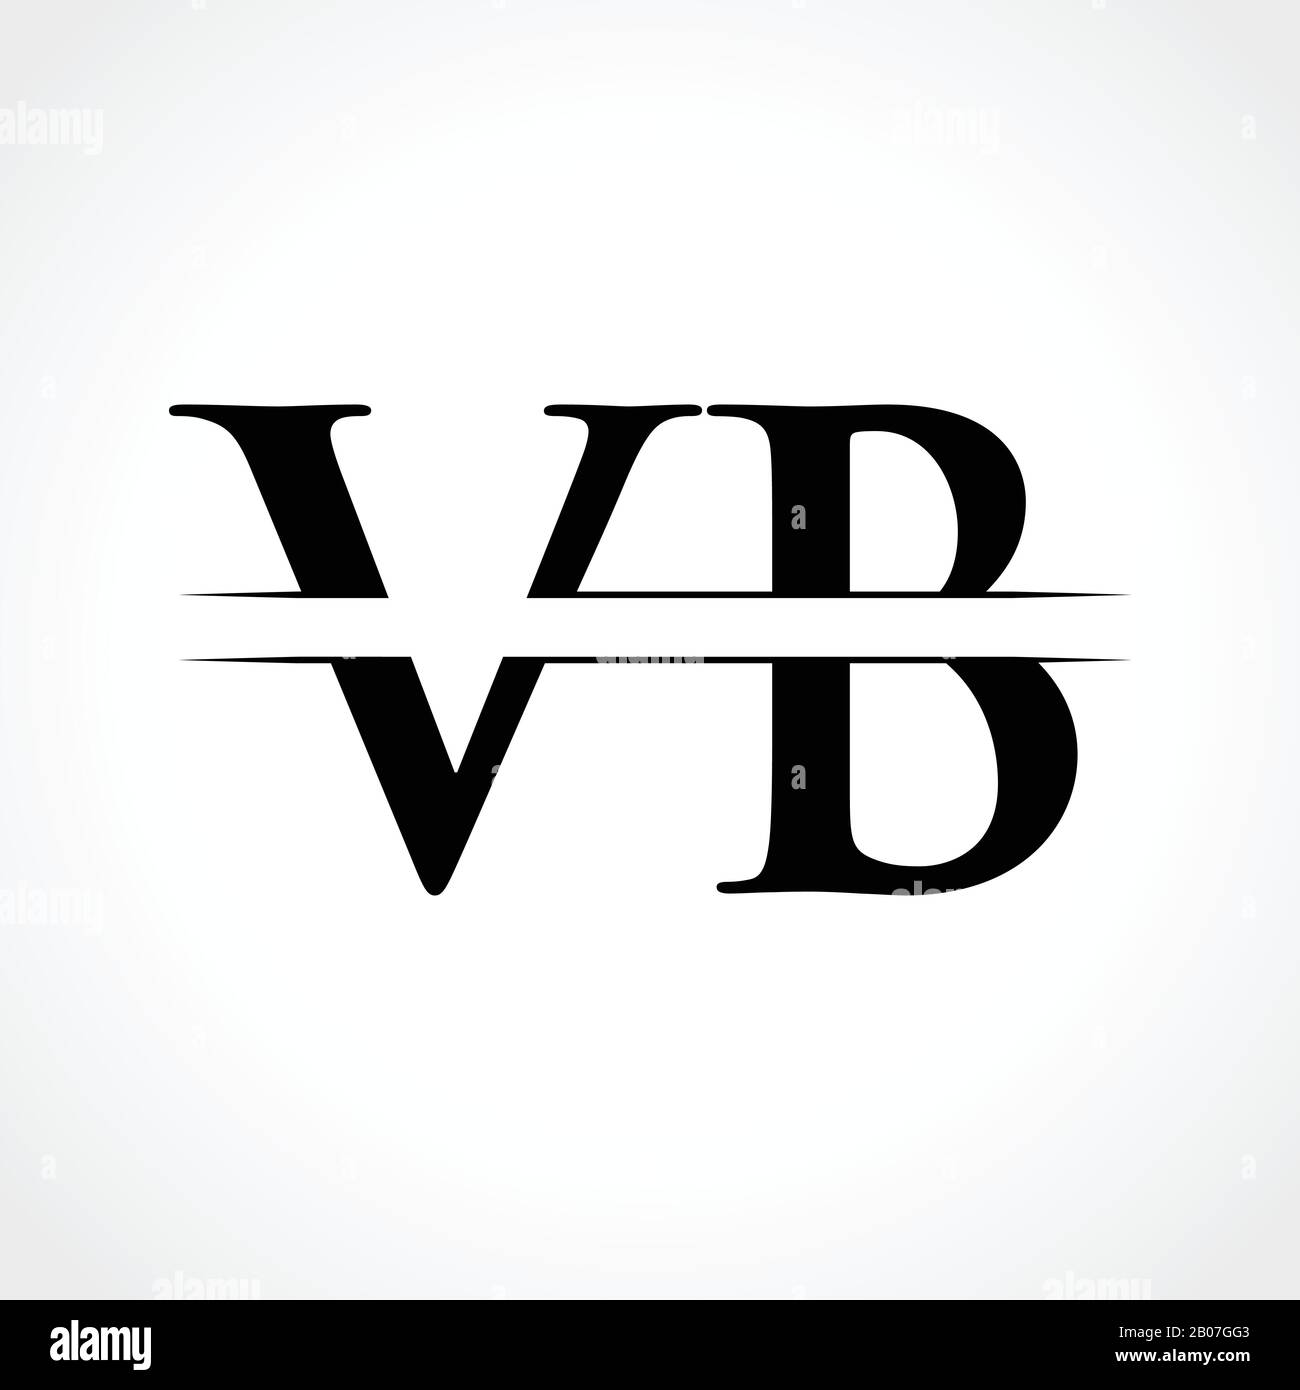 creative-letter-vb-logo-vector-template-with-black-color-vb-logo